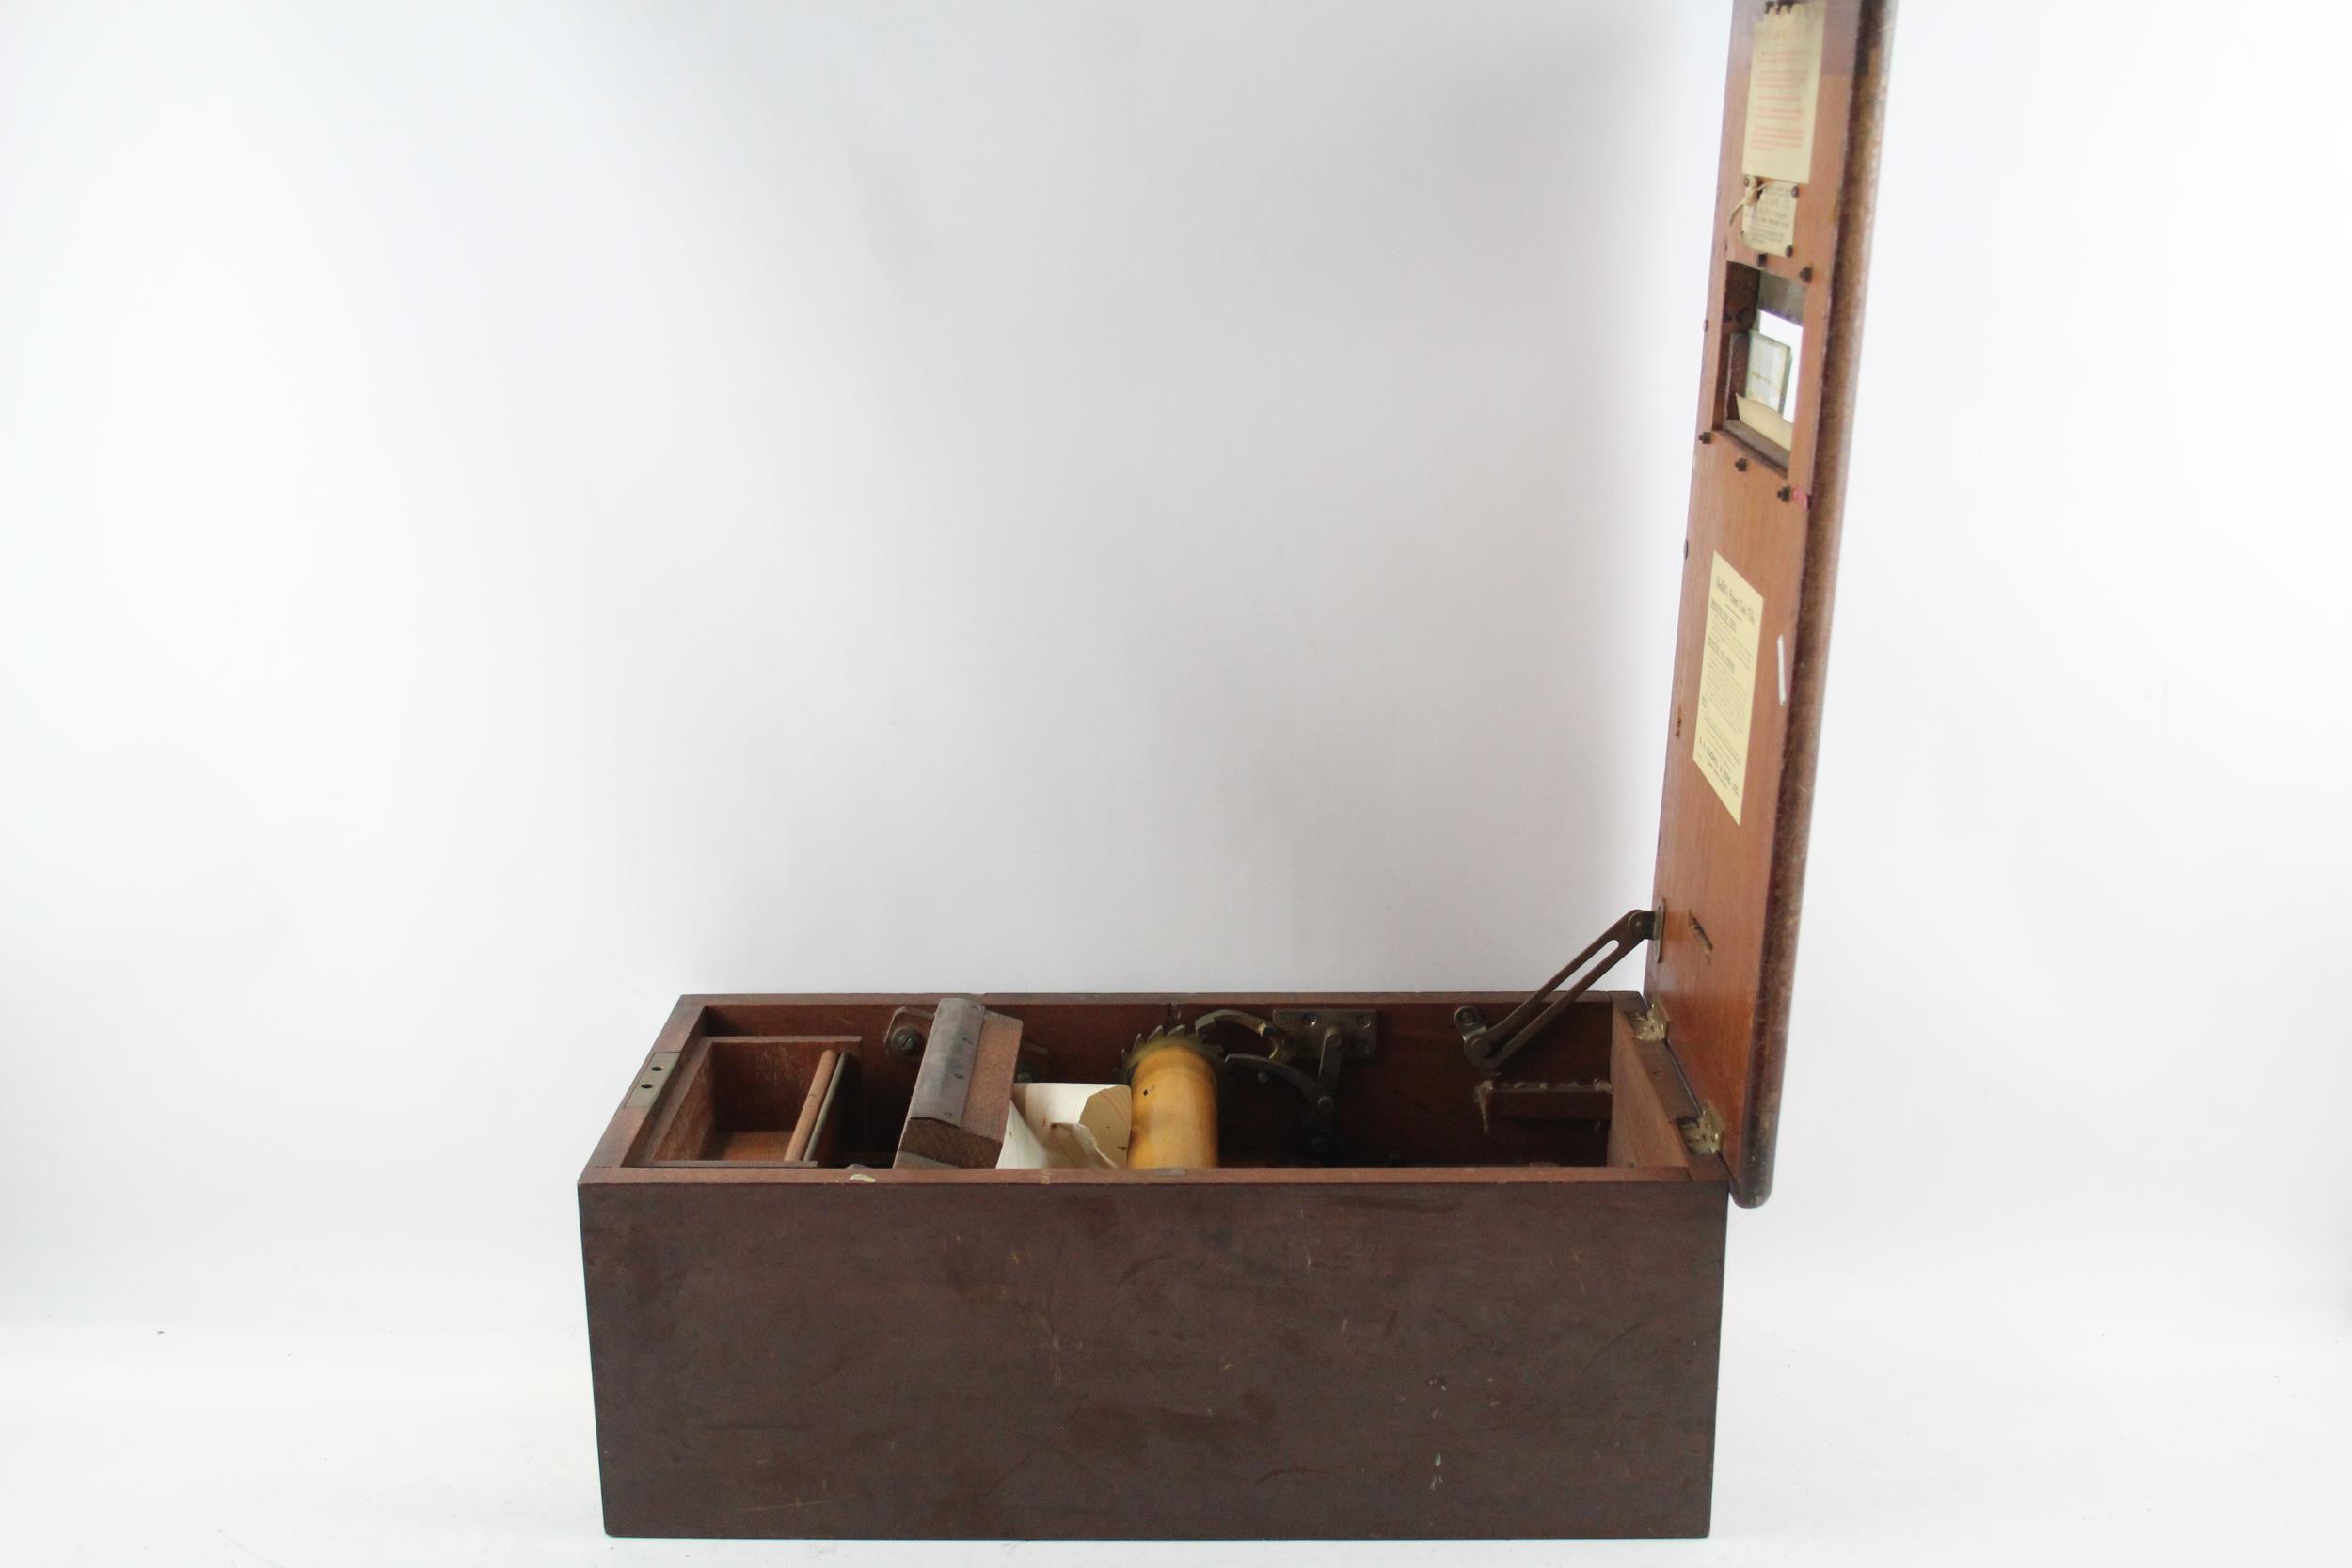 Antique Mahogany Cash Till Box By Gledhill & Sons Ltd. W/ Brass Elements - Approx Dimensions: